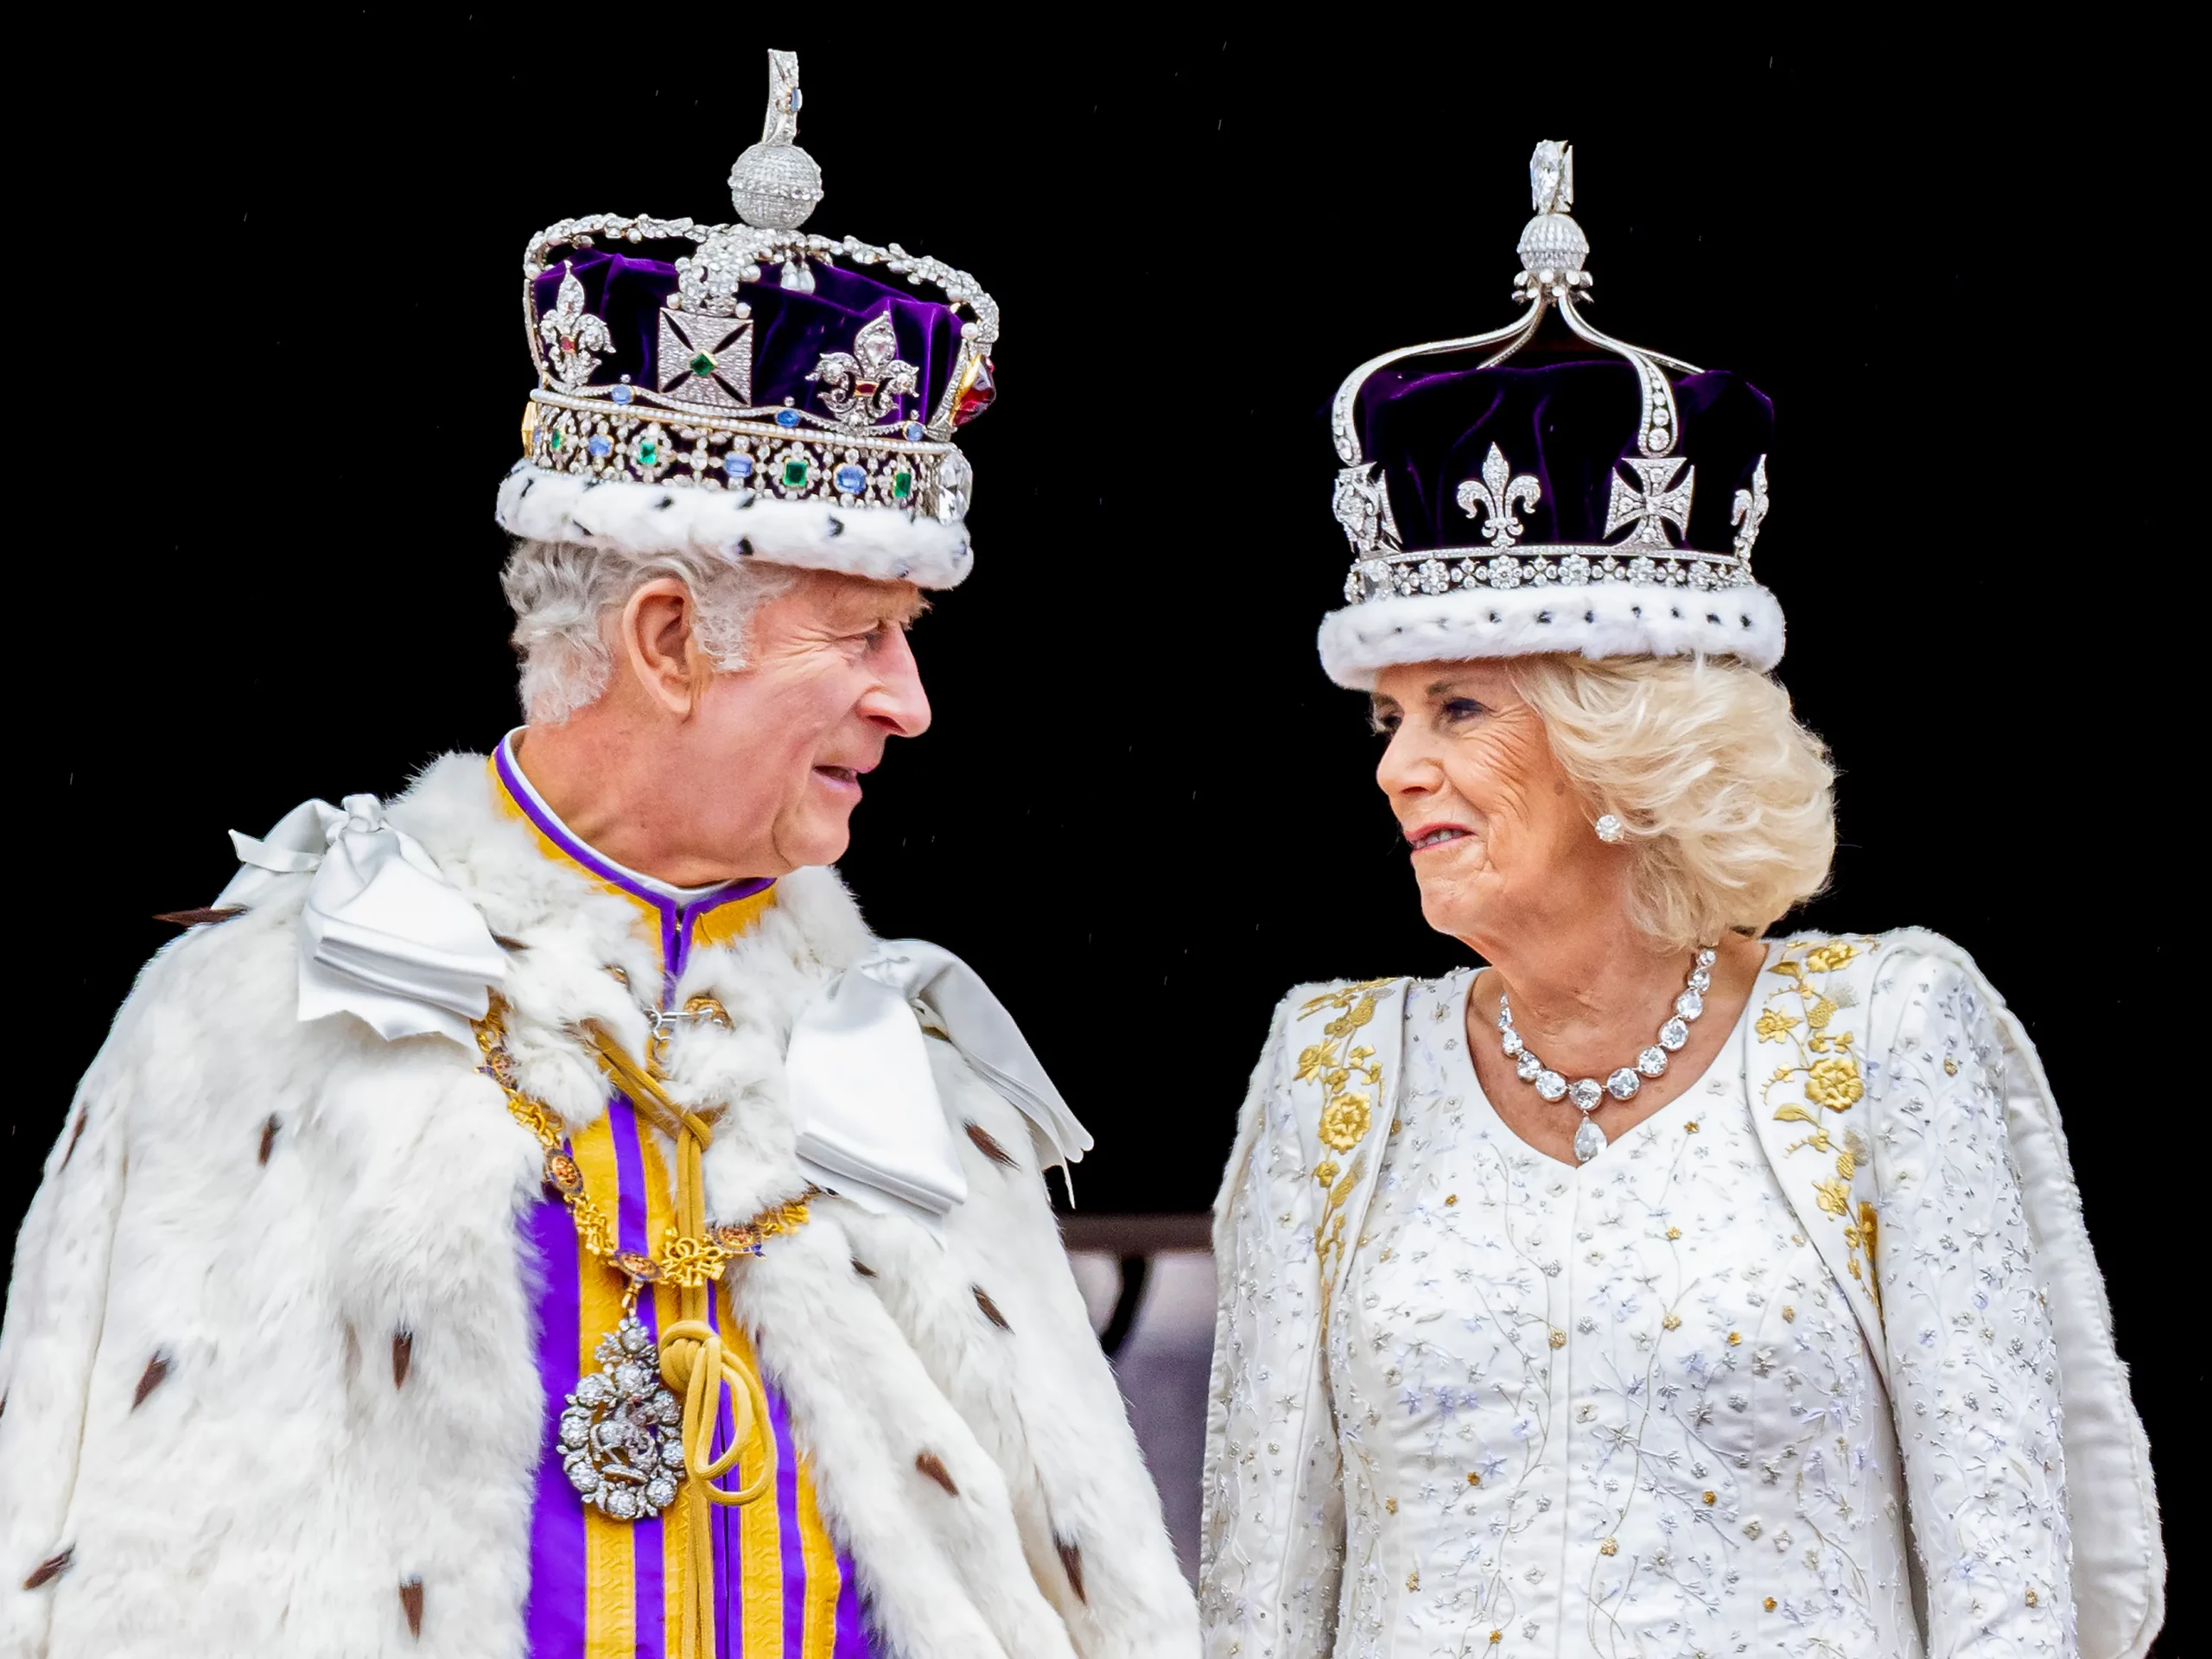 “King Charles’s Net Worth Surpasses Queen Elizabeth’s Peak Fortune by $150 Million on Coronation Day”